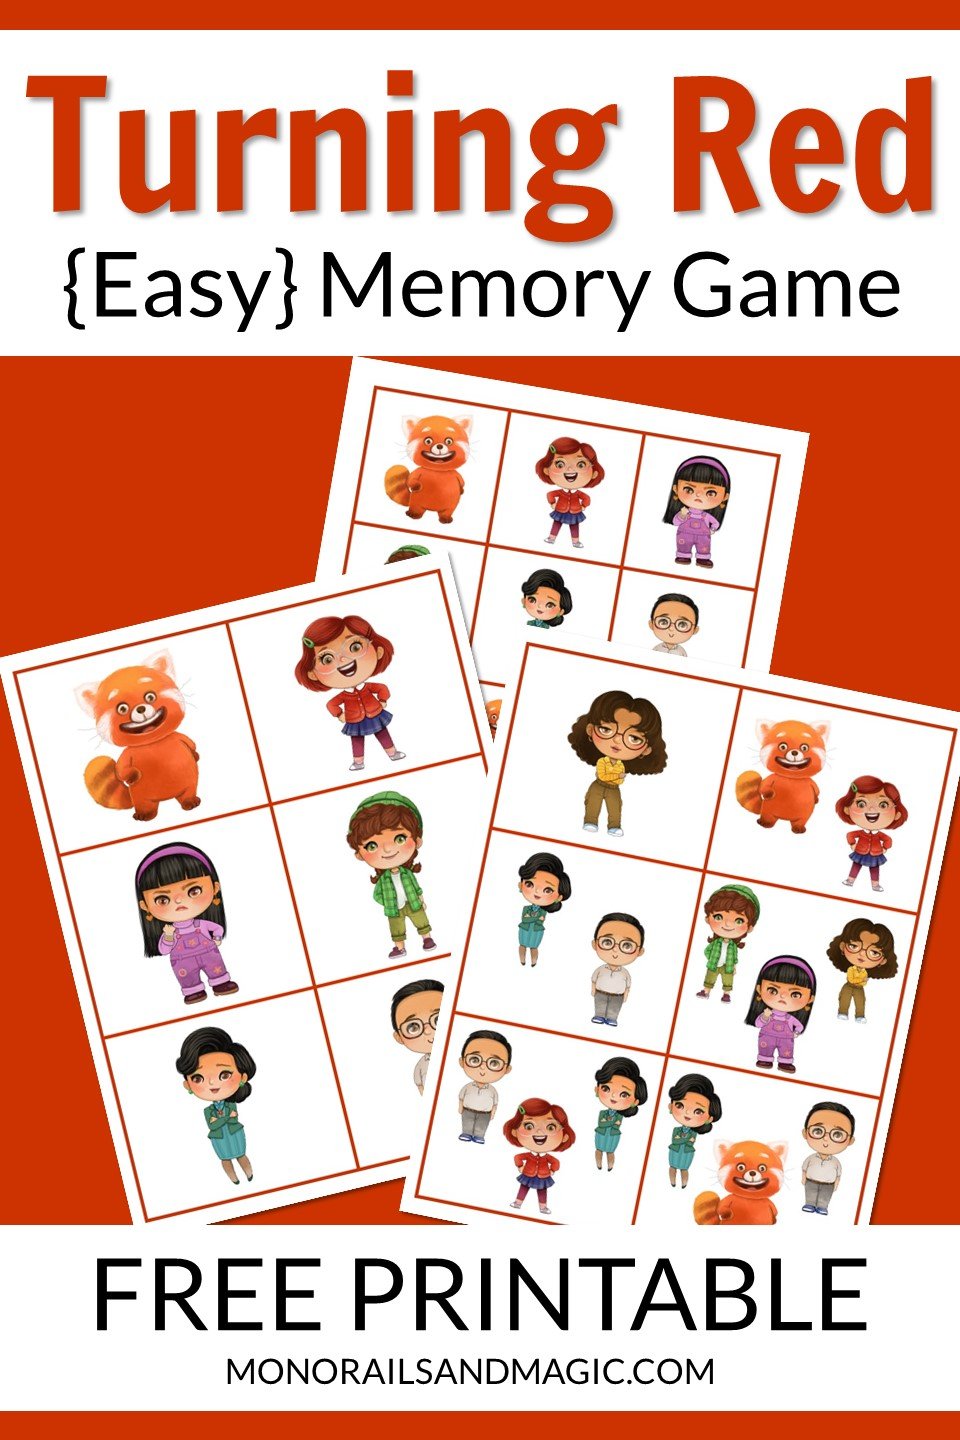 Free printable Turning Red memory game for kids.